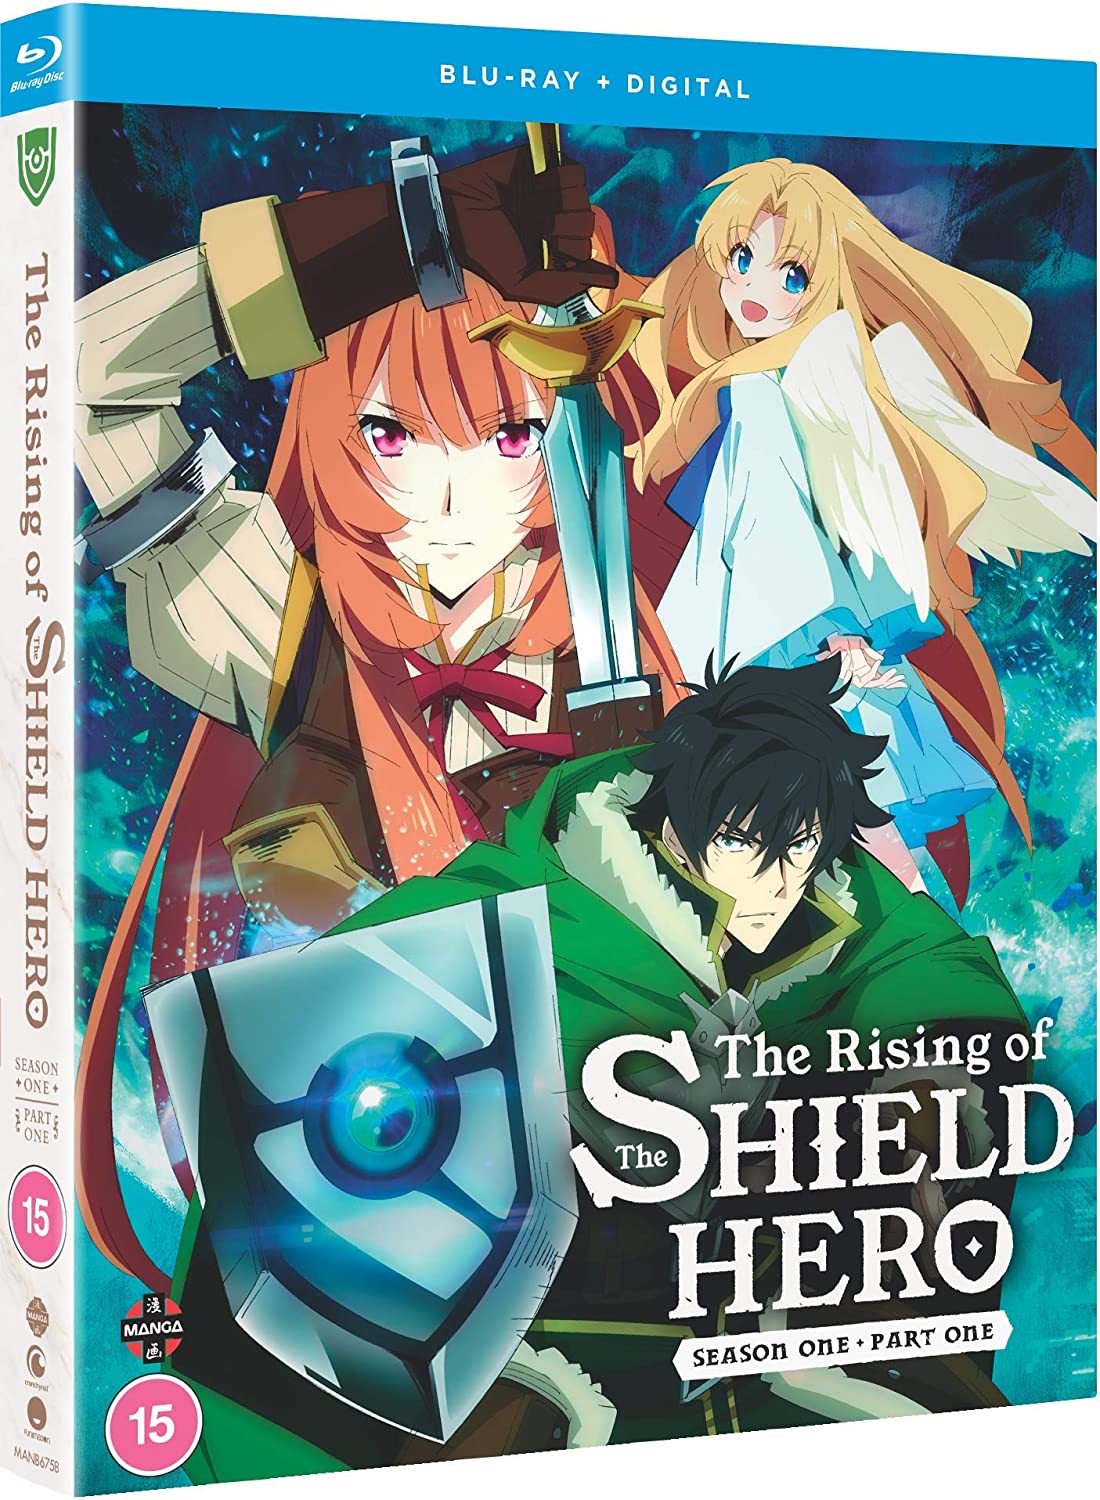 The Legend of the Legendary Heroes Season 1 Pt. 1 & 2 blu-ray/dvd